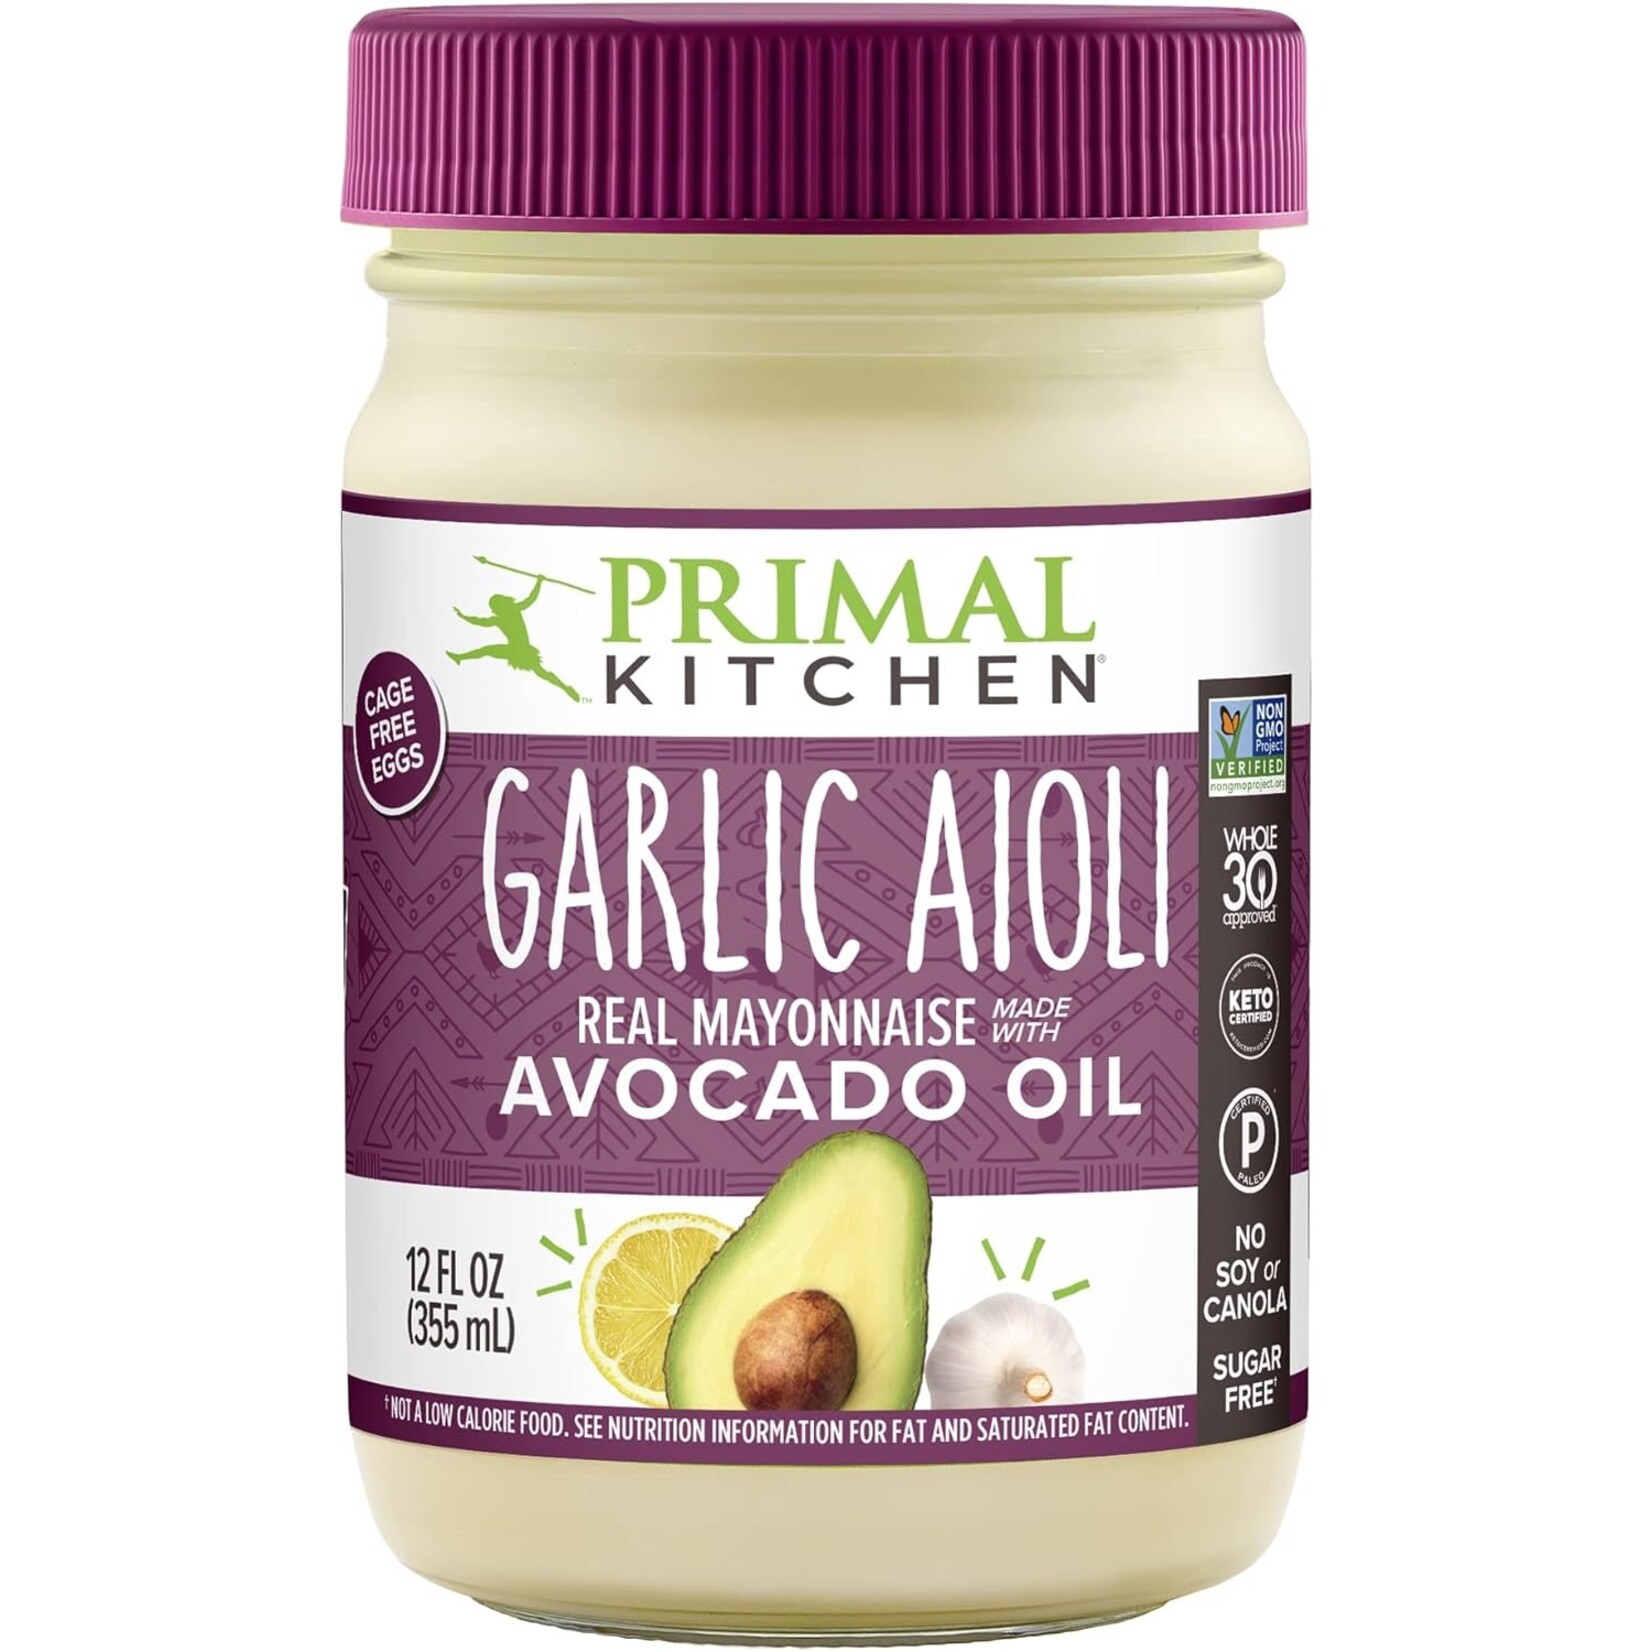 Nova Primal Kitchen Garlic Aioli Mayo with Avocado Oil, 12oz